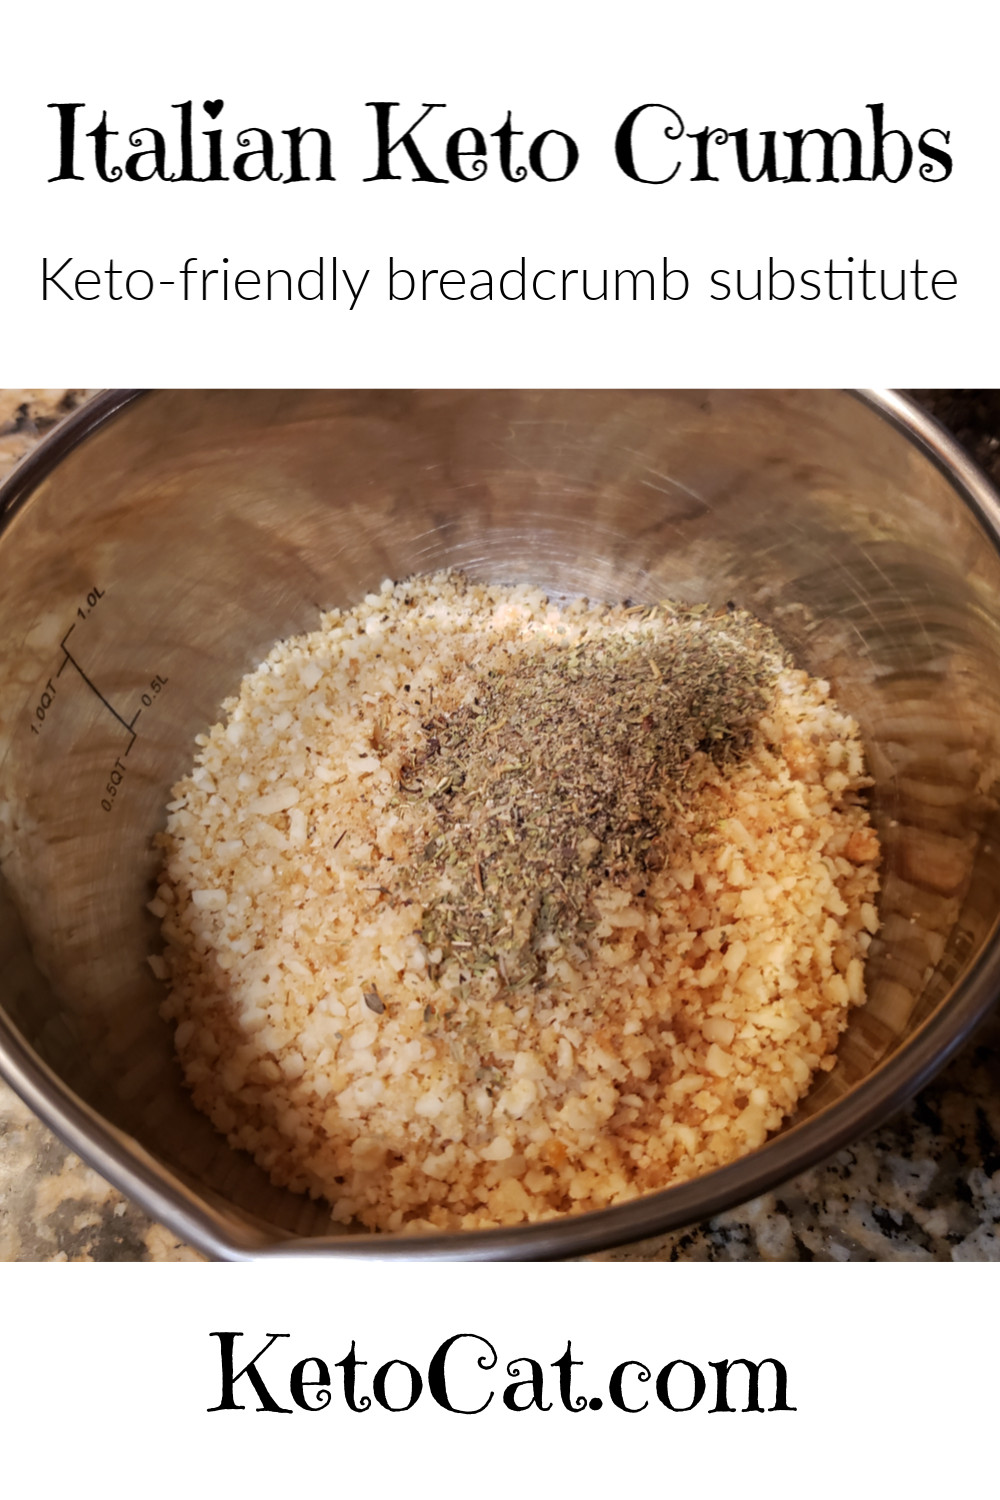 Keto Bread Crumbs For Fish Italian Keto Crumbs With Nuts Recipe